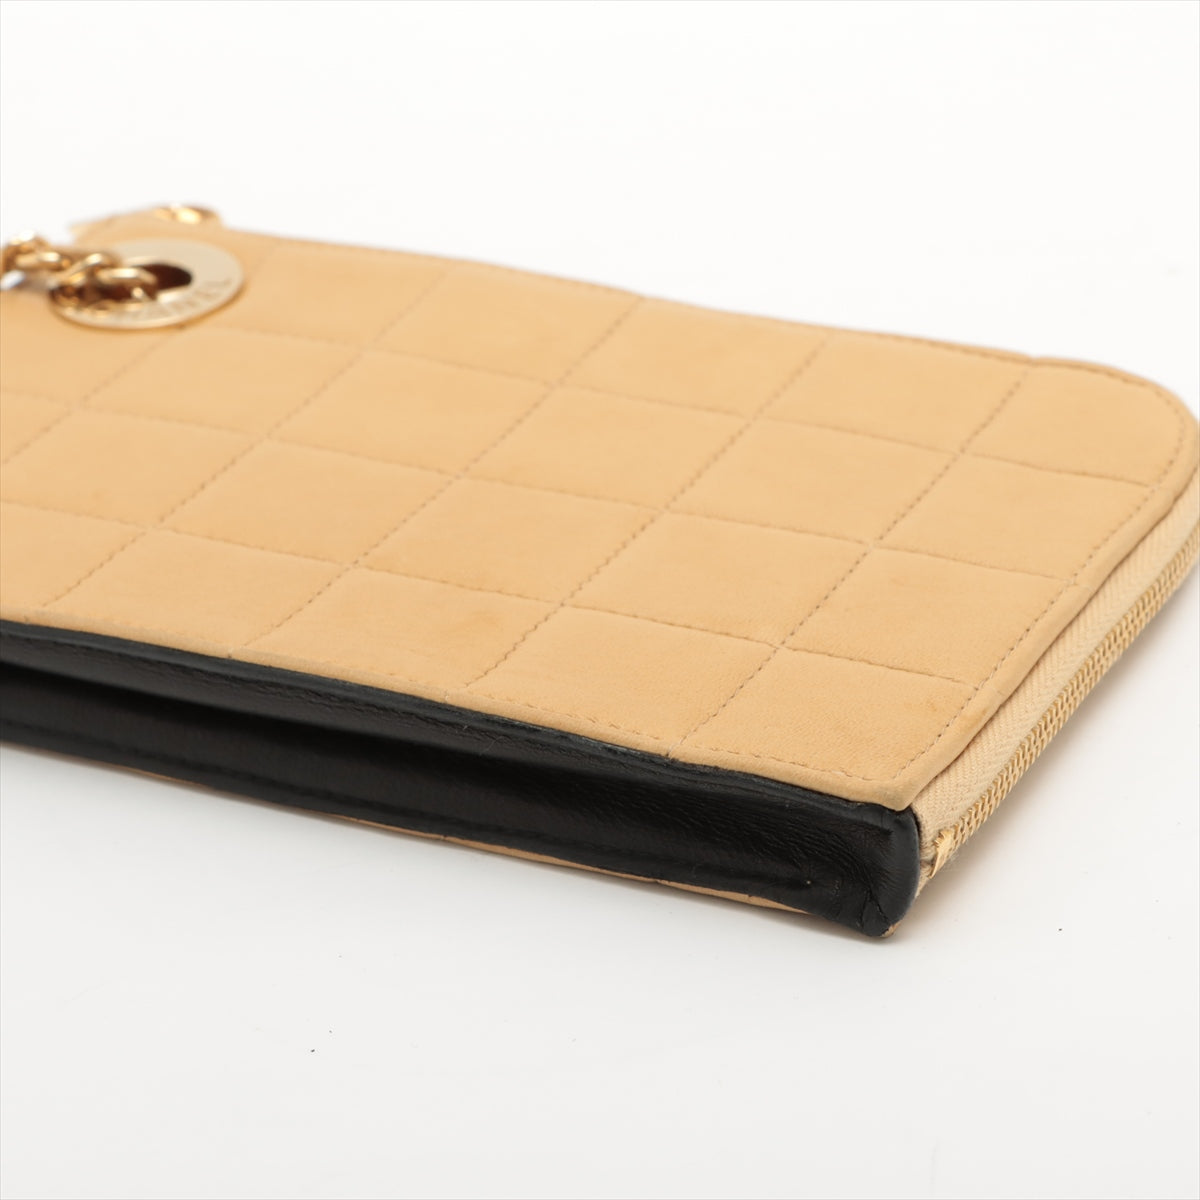 Chanel Chocolate Bar Lambskin Handbag Beige Gold Metal Fittings 7XXXXXX